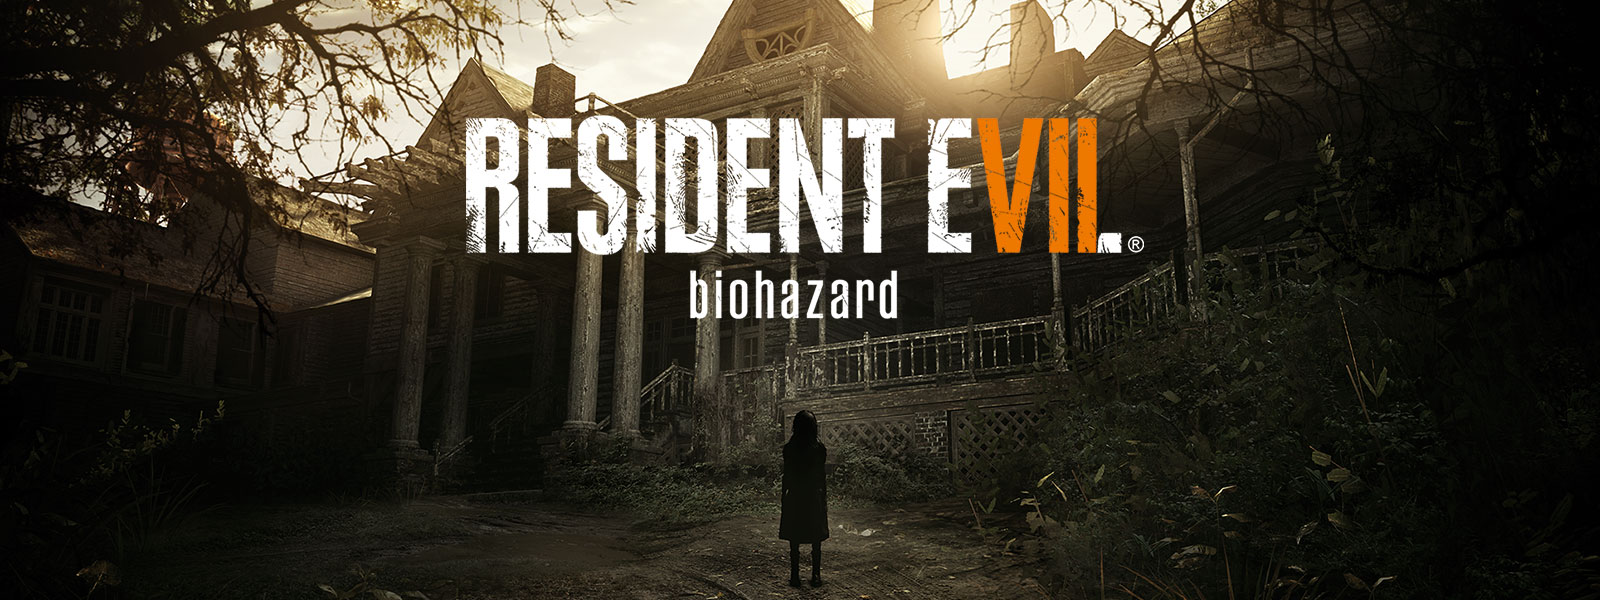 Resident Evil 7 Biohazard 黃金版外包裝圖，底下是幽靈般的女孩站在鬼屋前方的場景